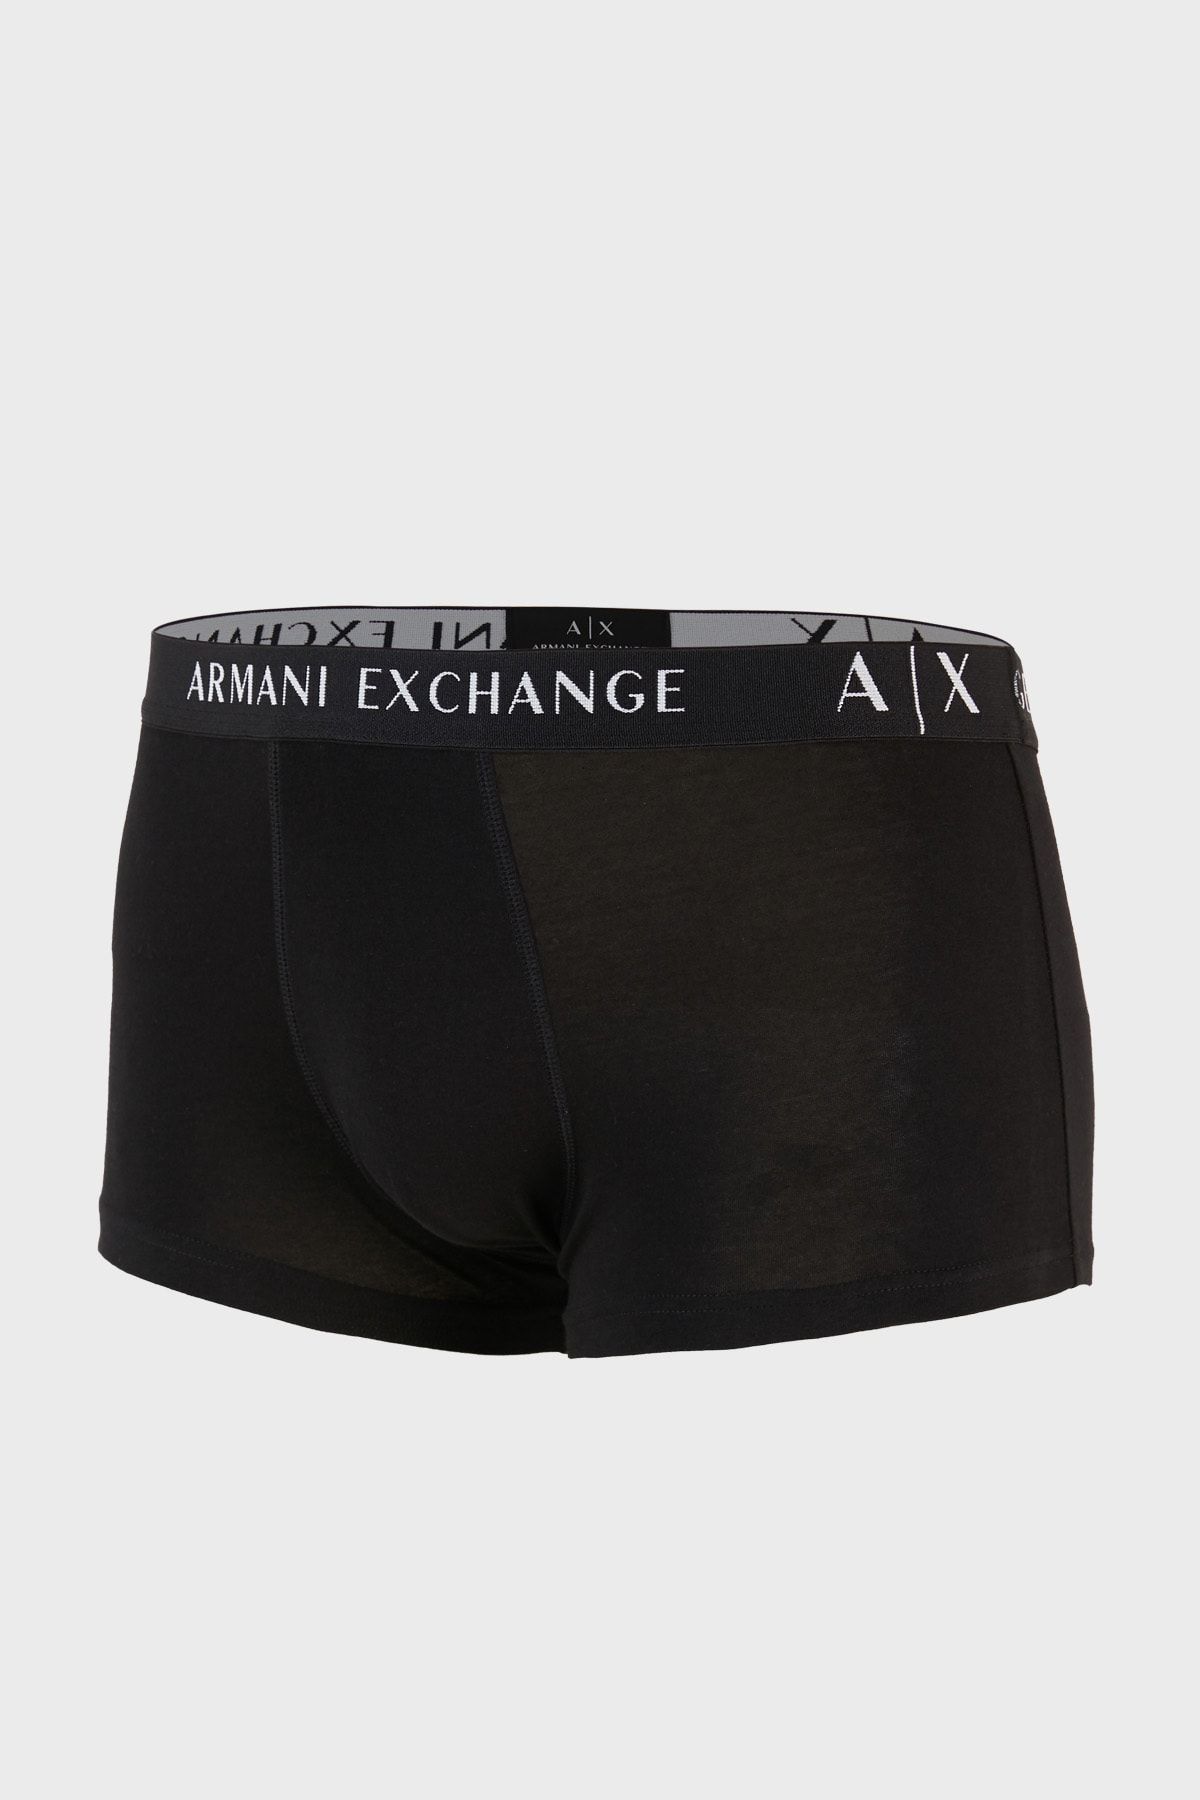 Armani Exchange Boxer Men's Boxer 956002 Cc282 00010 - Trendyol